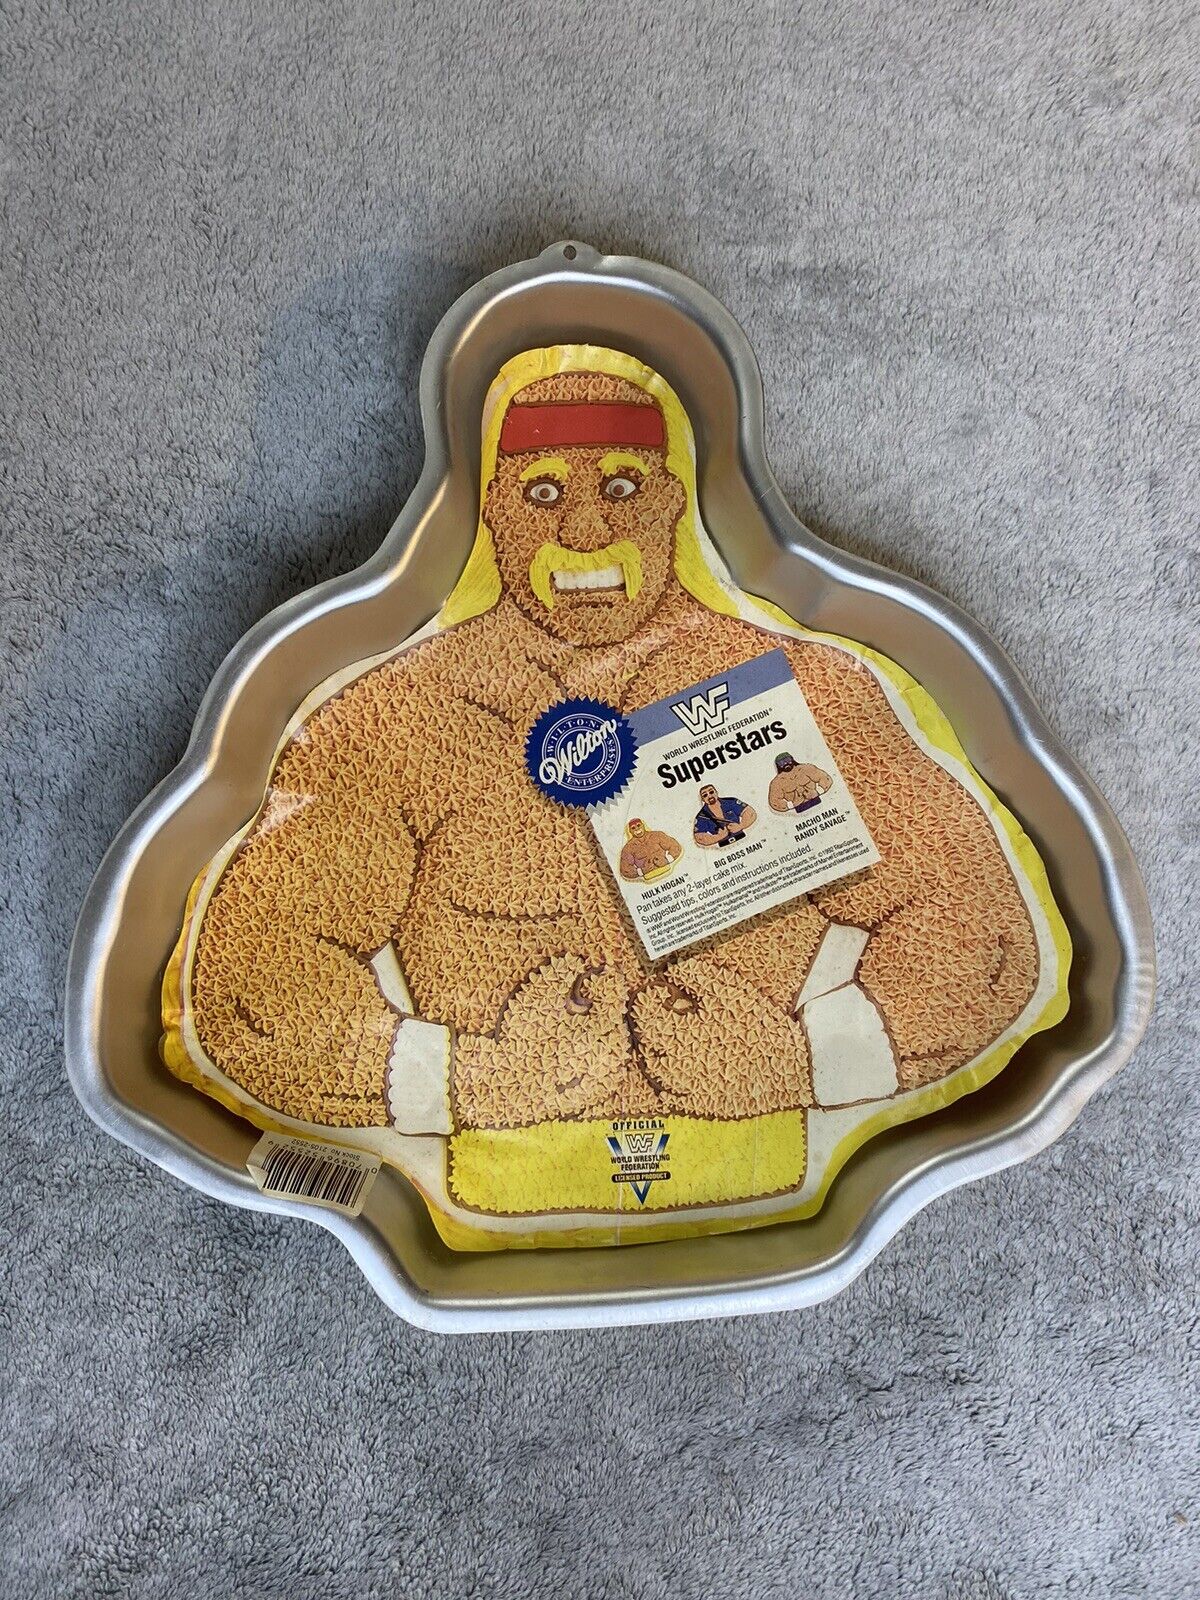 1992 Hulk Hogan WWF Superstars Wilton Cake Pan Un-Used Rare Vintage WWE